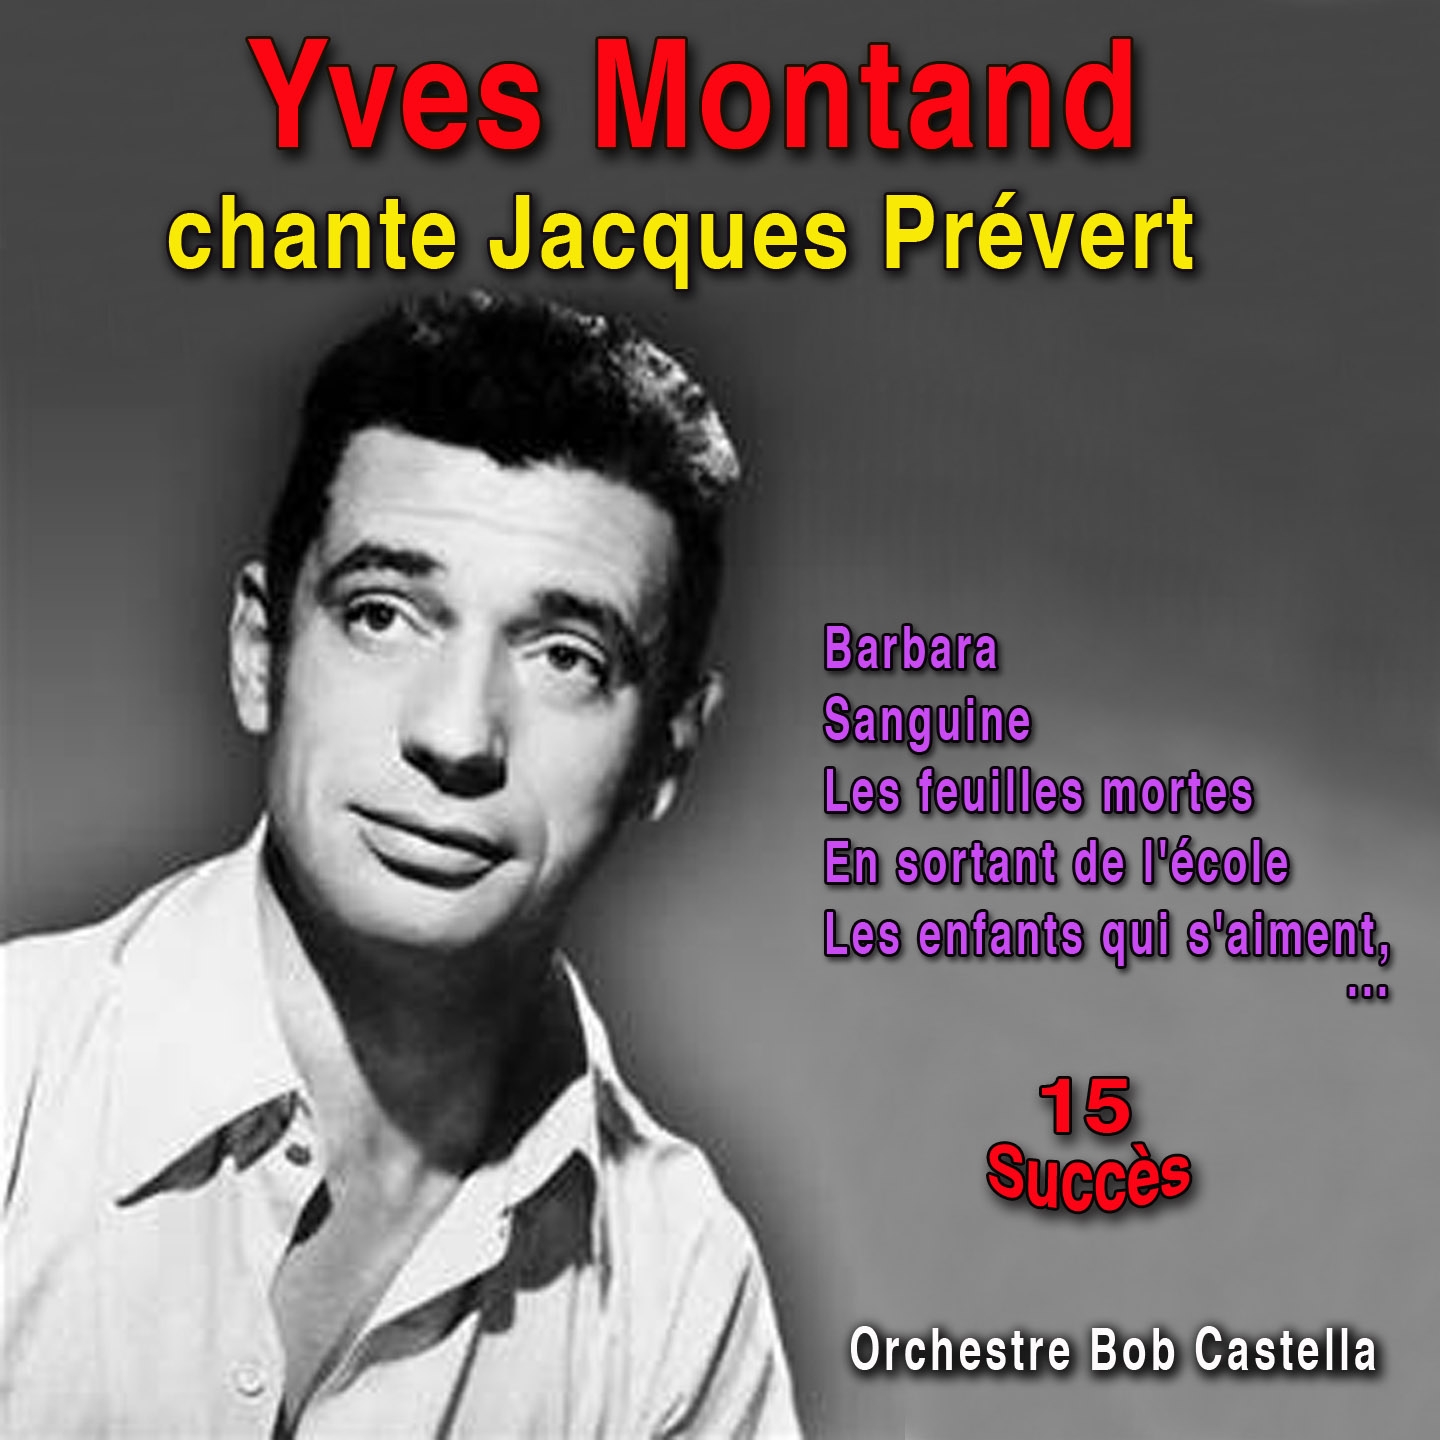 Yves Montand chante Jacques Pre vert